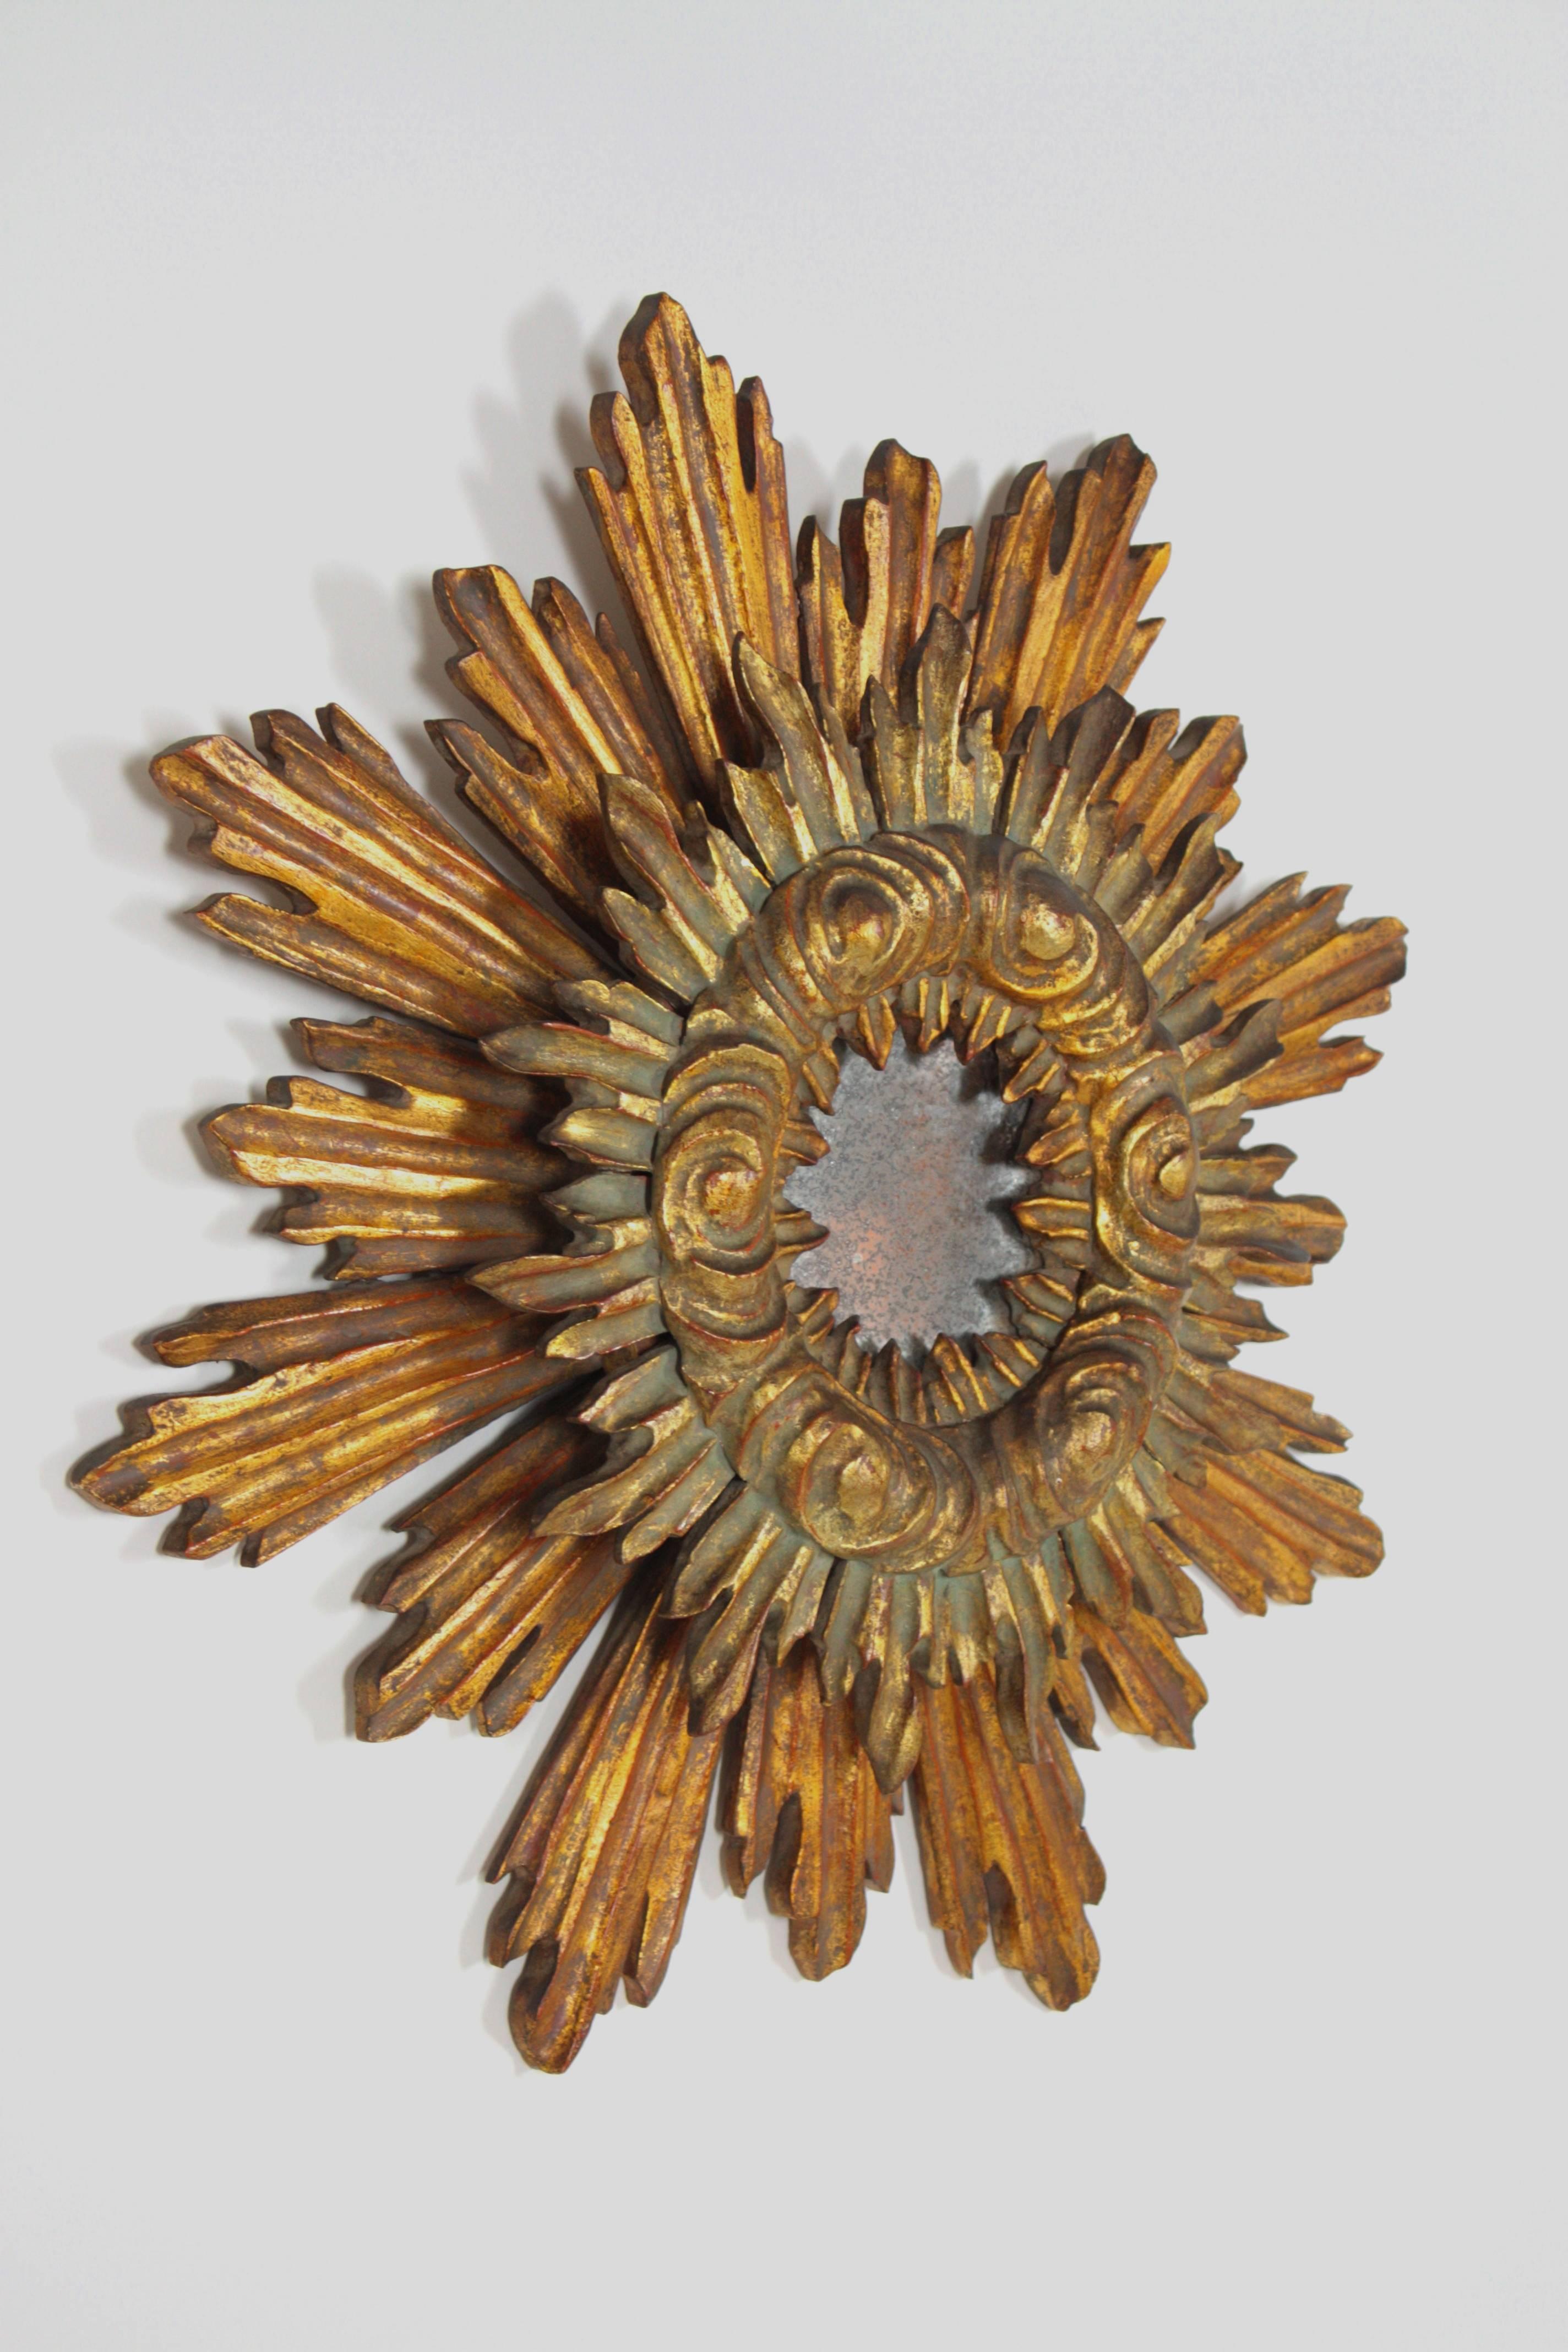 Carved Amazing 19th Century Spanish Giltwood Sunburst Mirror in Baroque Style